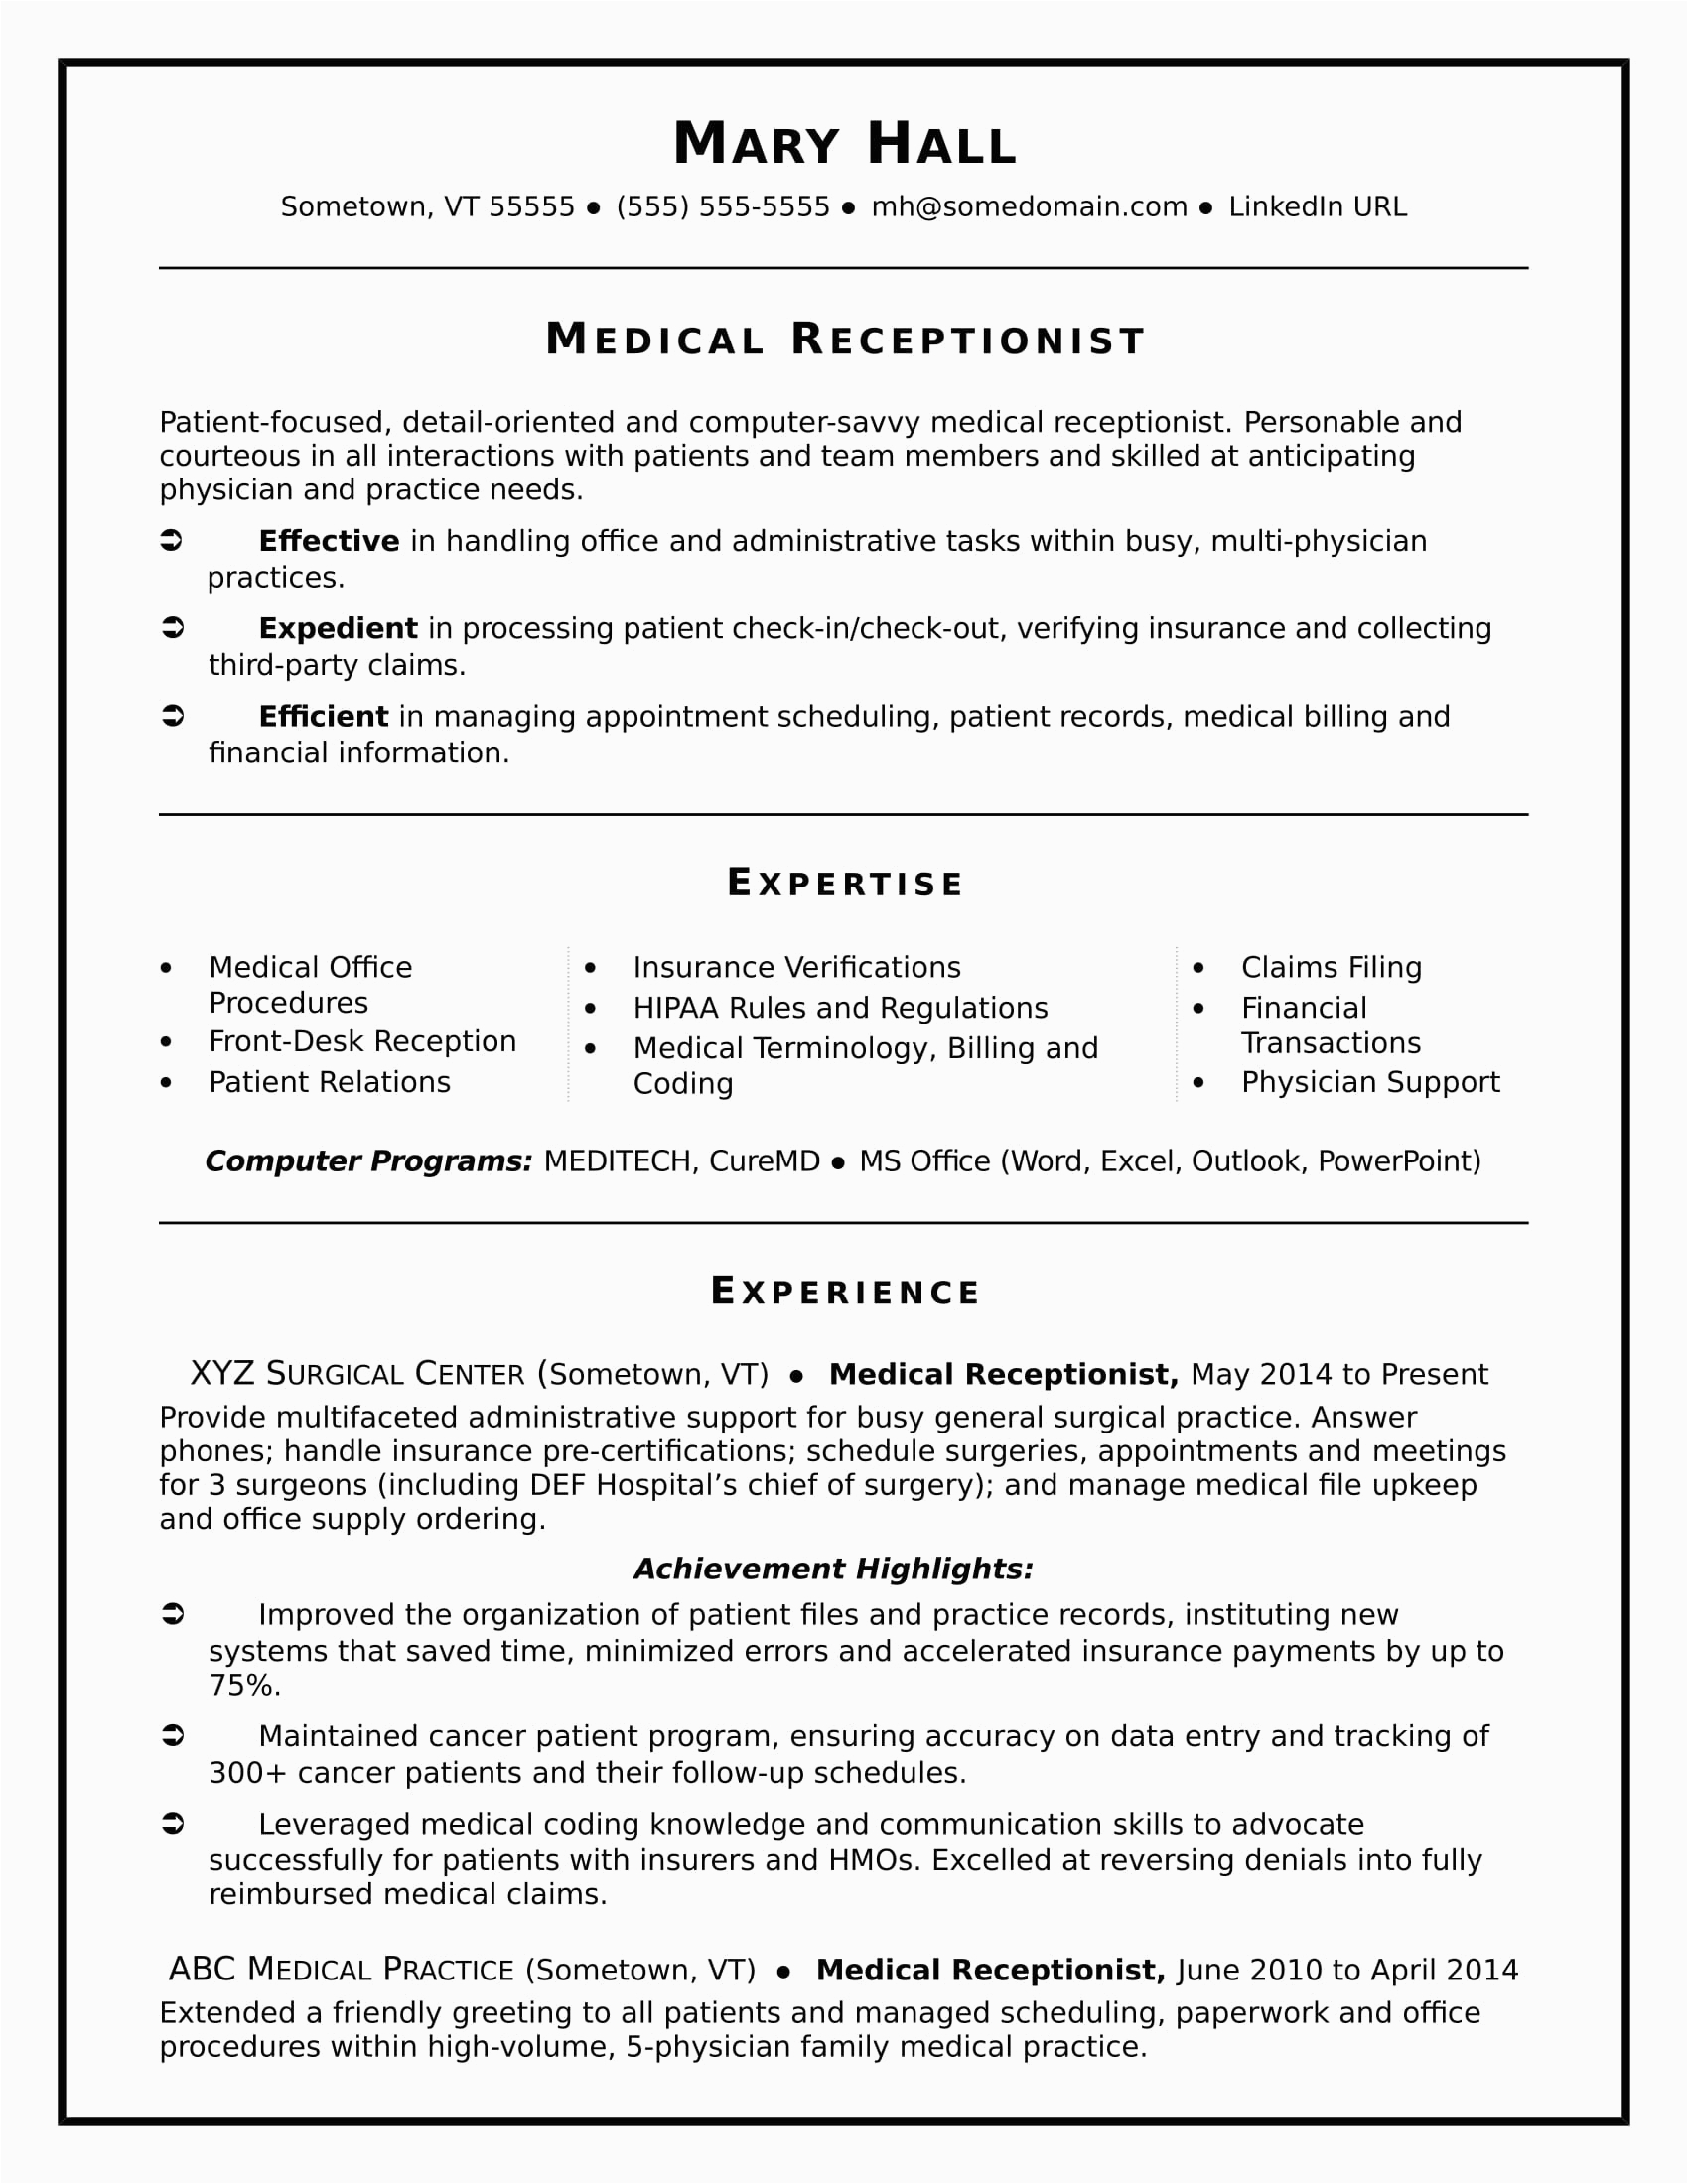 Resume Sample for Medical Office Receptionist Medical Receptionist Resume Sample